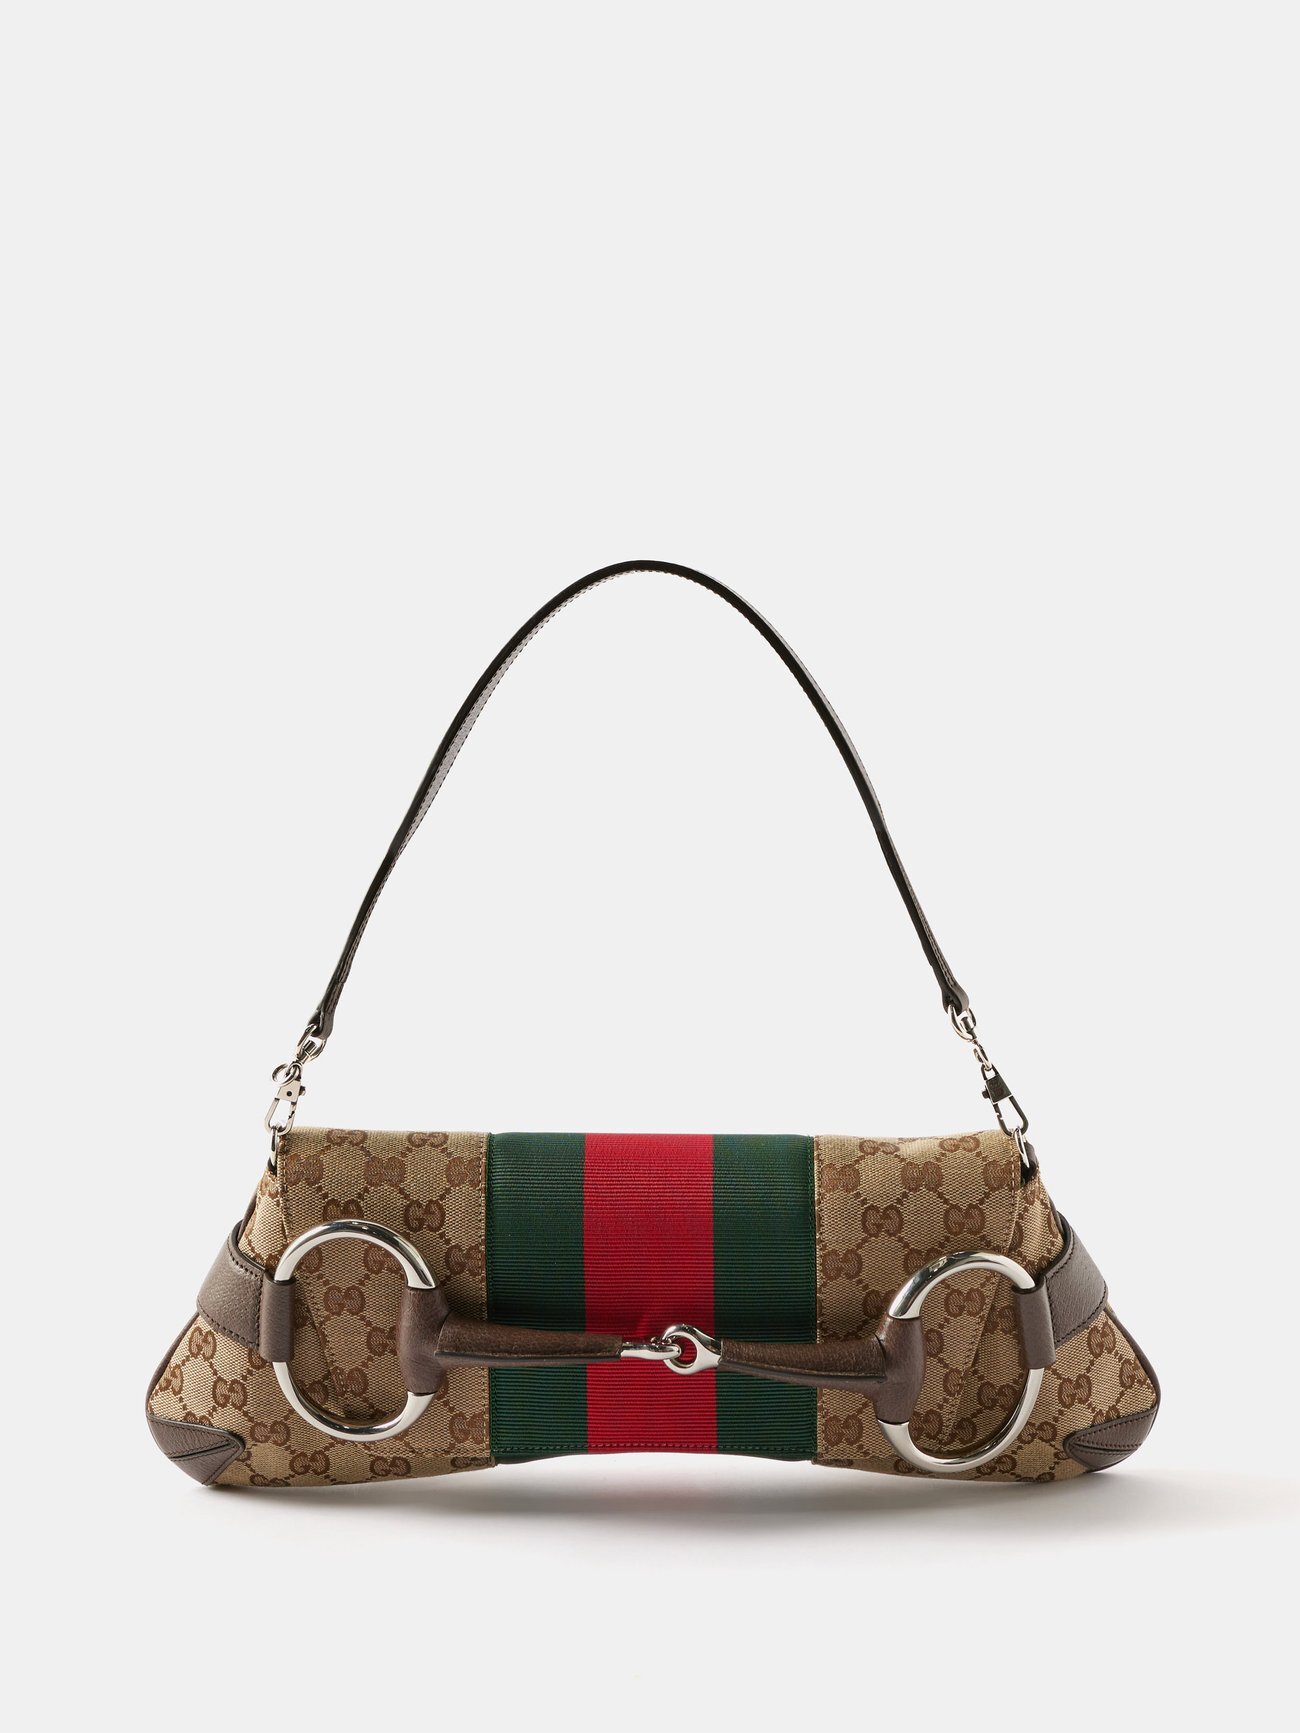 Gucci - Horsebit Medium Gg-supreme Canvas Shoulder Bag - Womens - Beige Multi